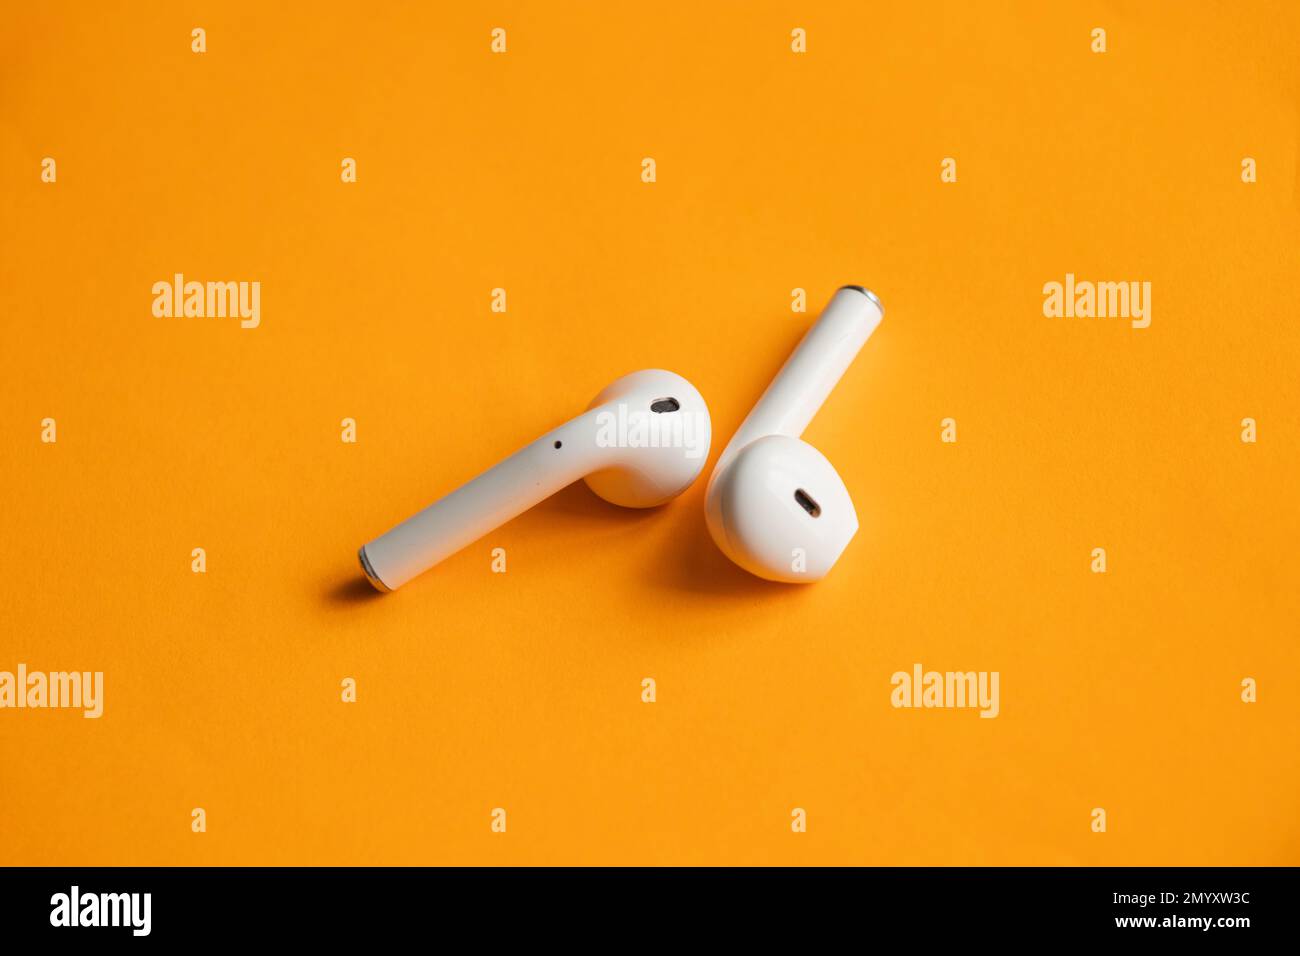 Wireless headphones lie on a light orange background Stock Photo